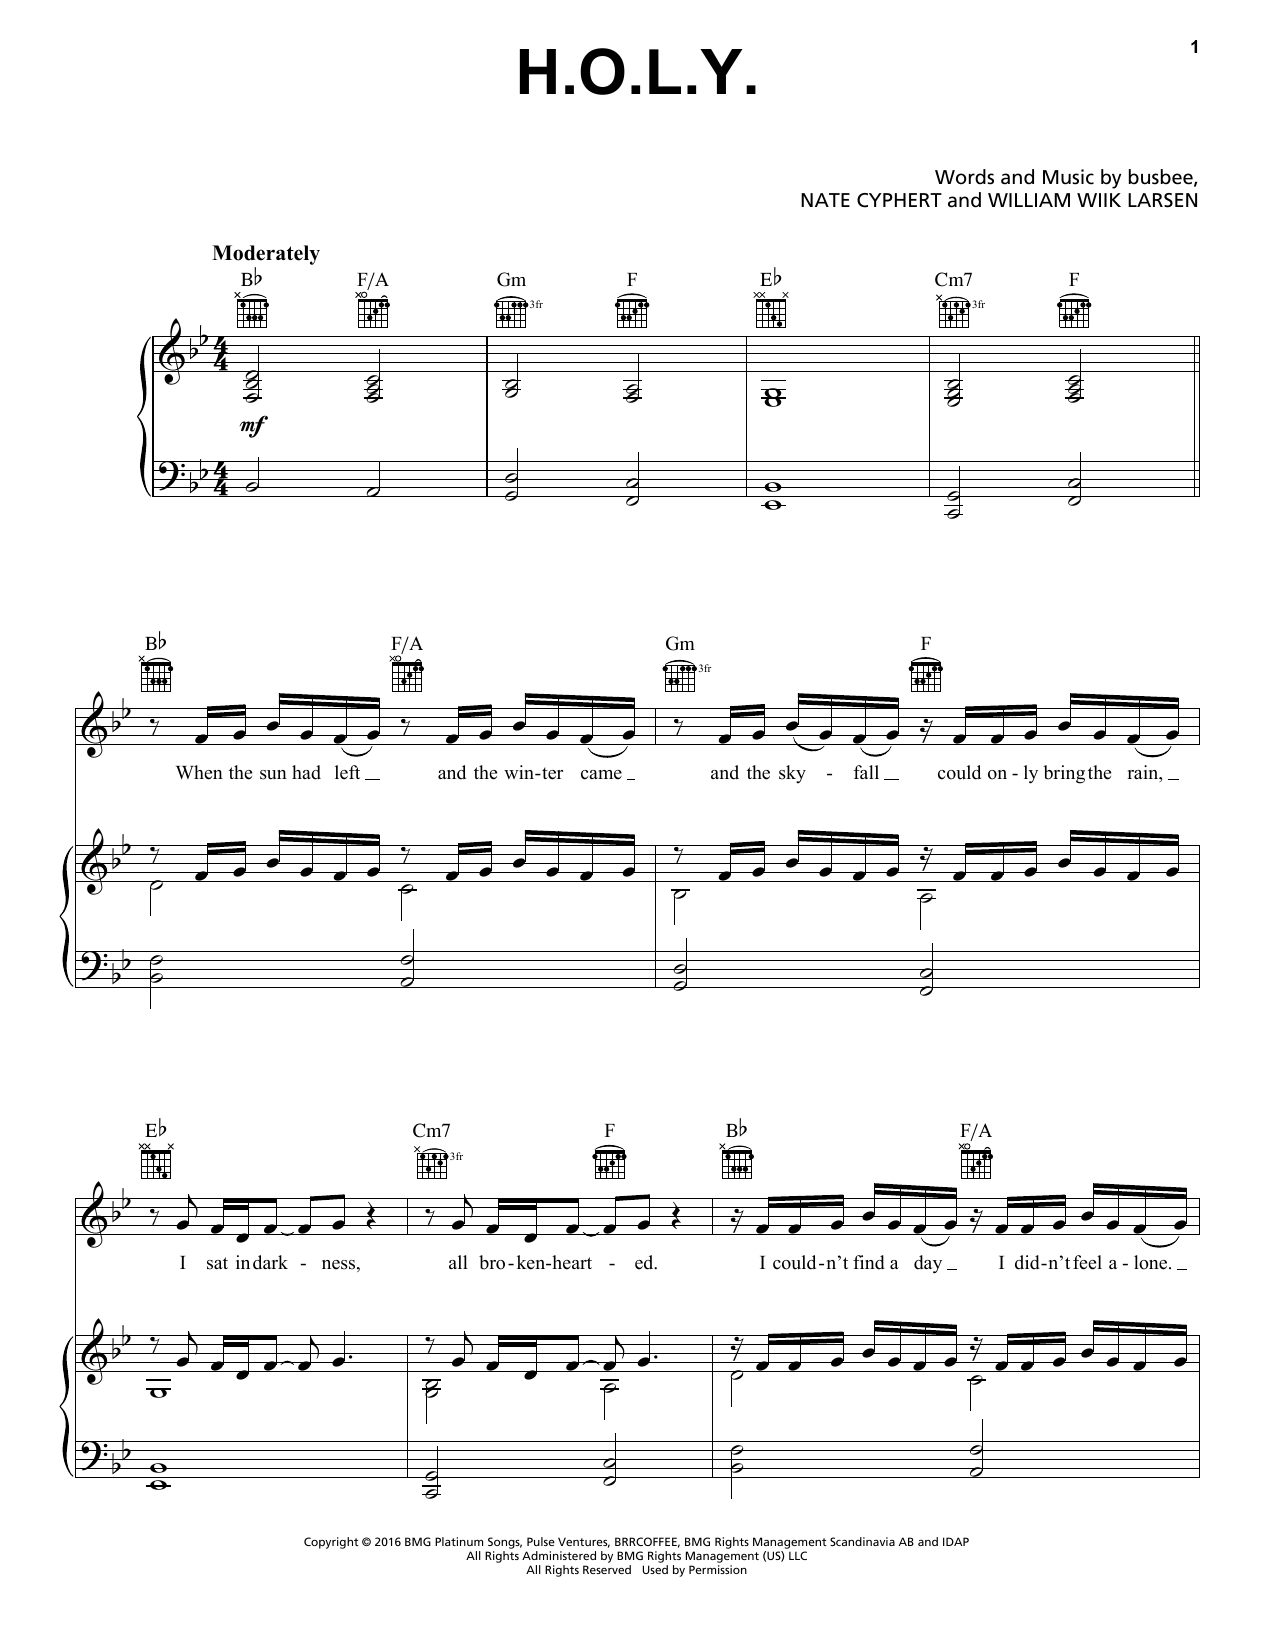 Florida Georgia Line H.O.L.Y. Sheet Music Notes & Chords for Guitar Lead Sheet - Download or Print PDF